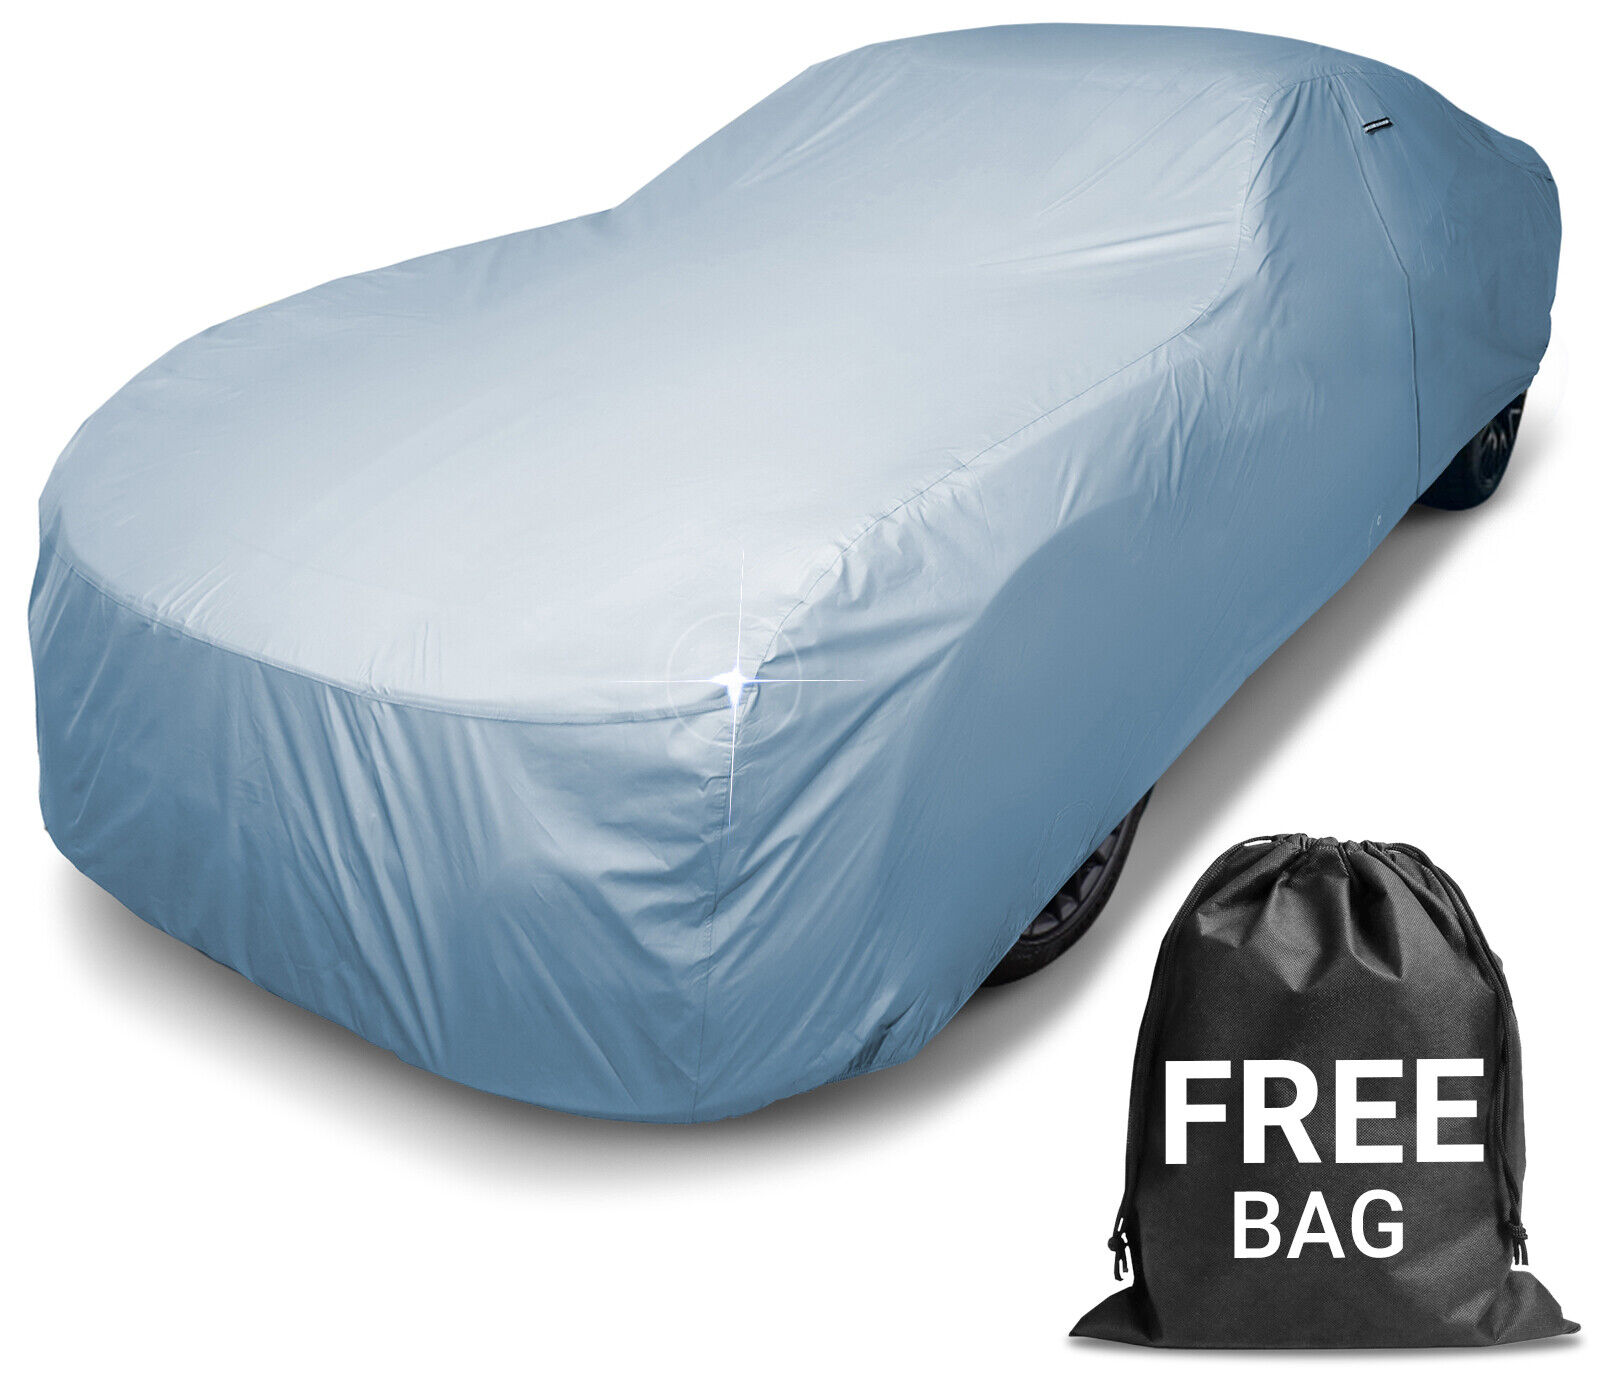 PONTIAC [CATALINA] Premium Custom-Fit Outdoor Waterproof Car Cover